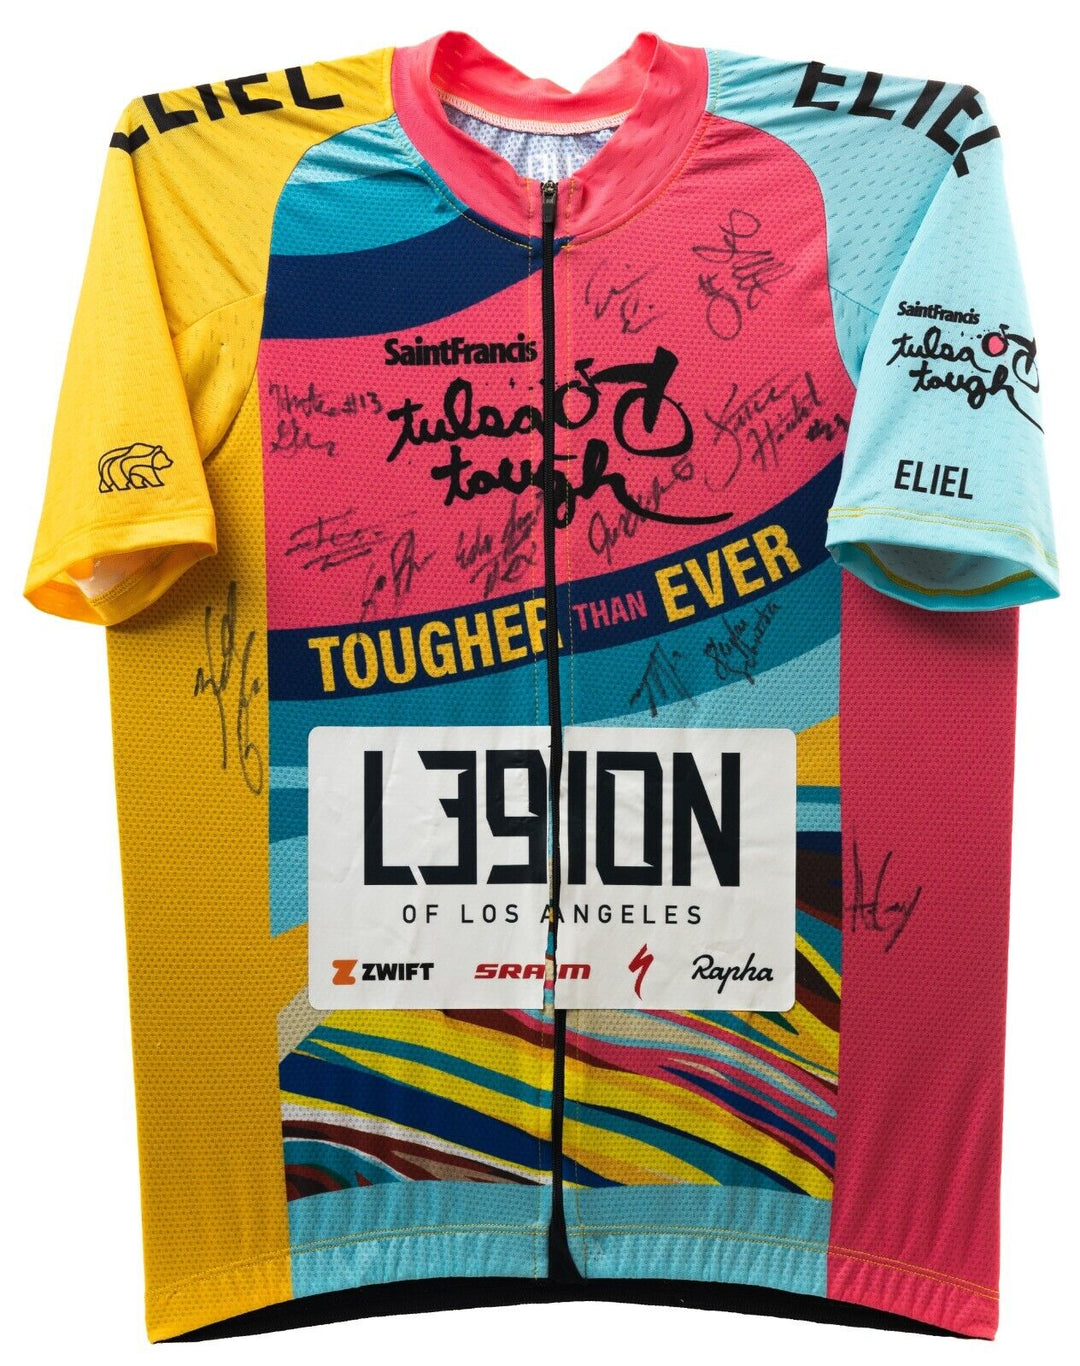 2021 Tulsa Tough Men Champion L39ION Pro Cycling MEDIUM Short Slv Jersey Signed